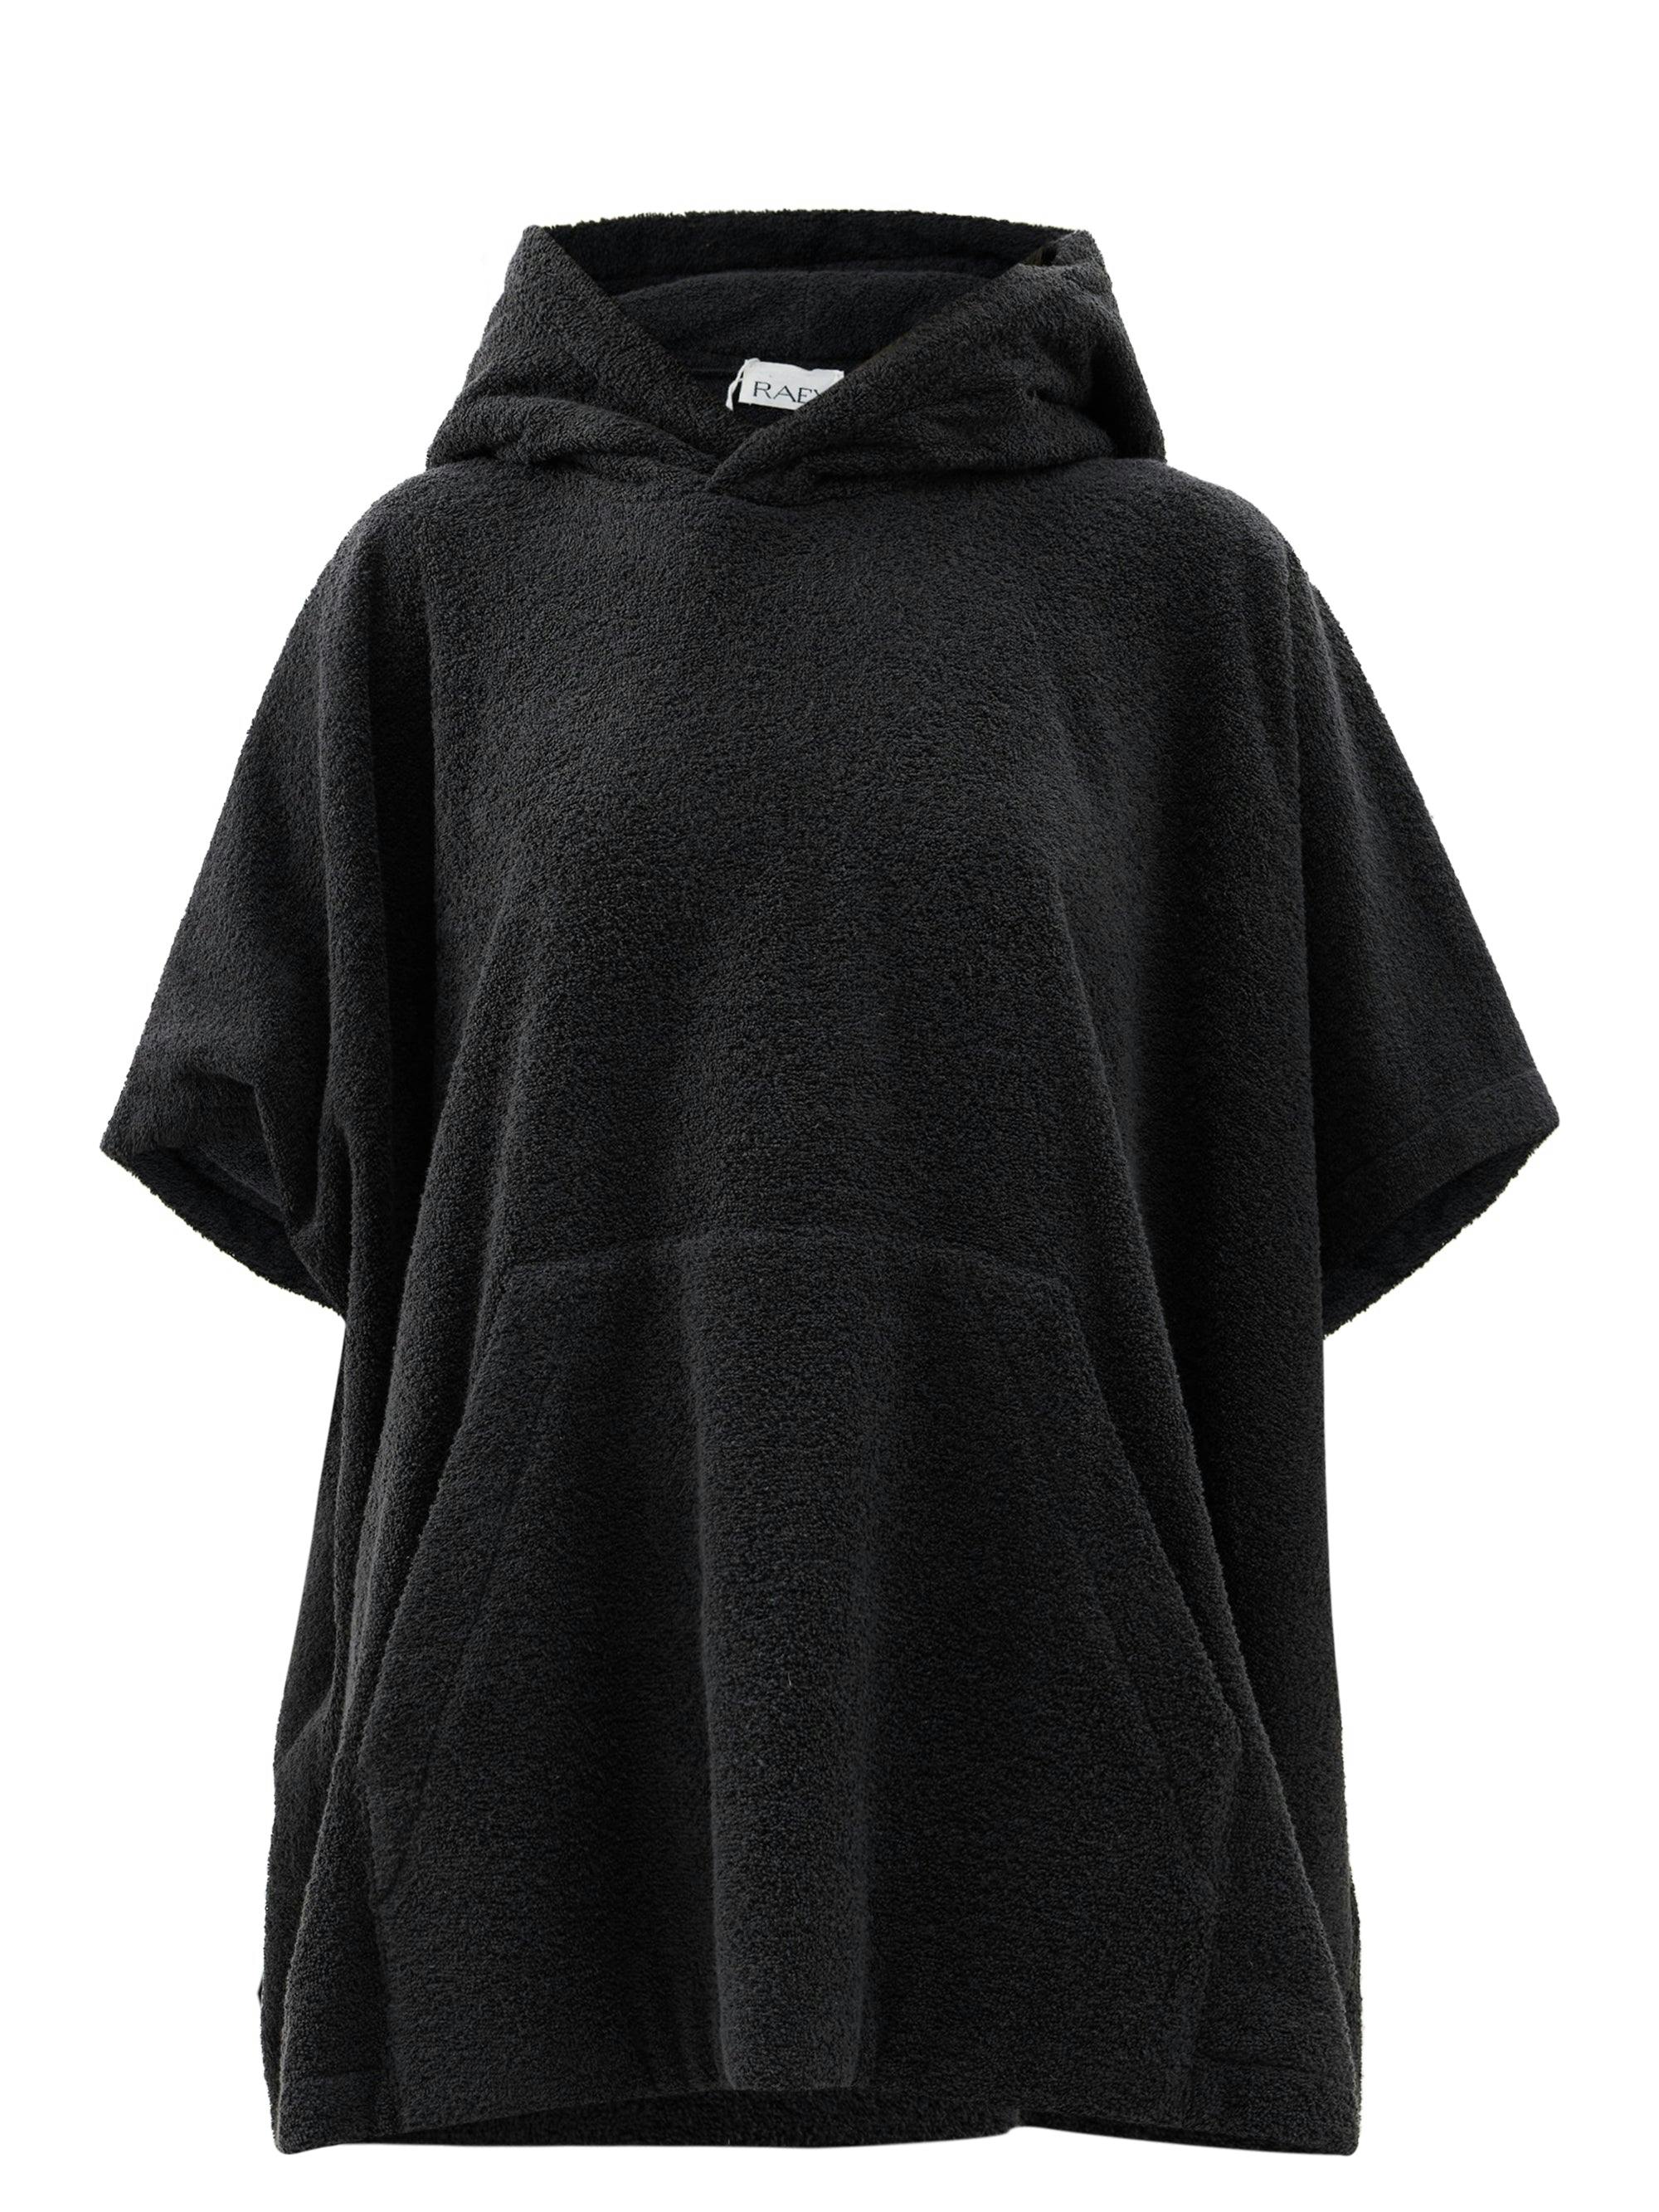 Black towelling hooded poncho